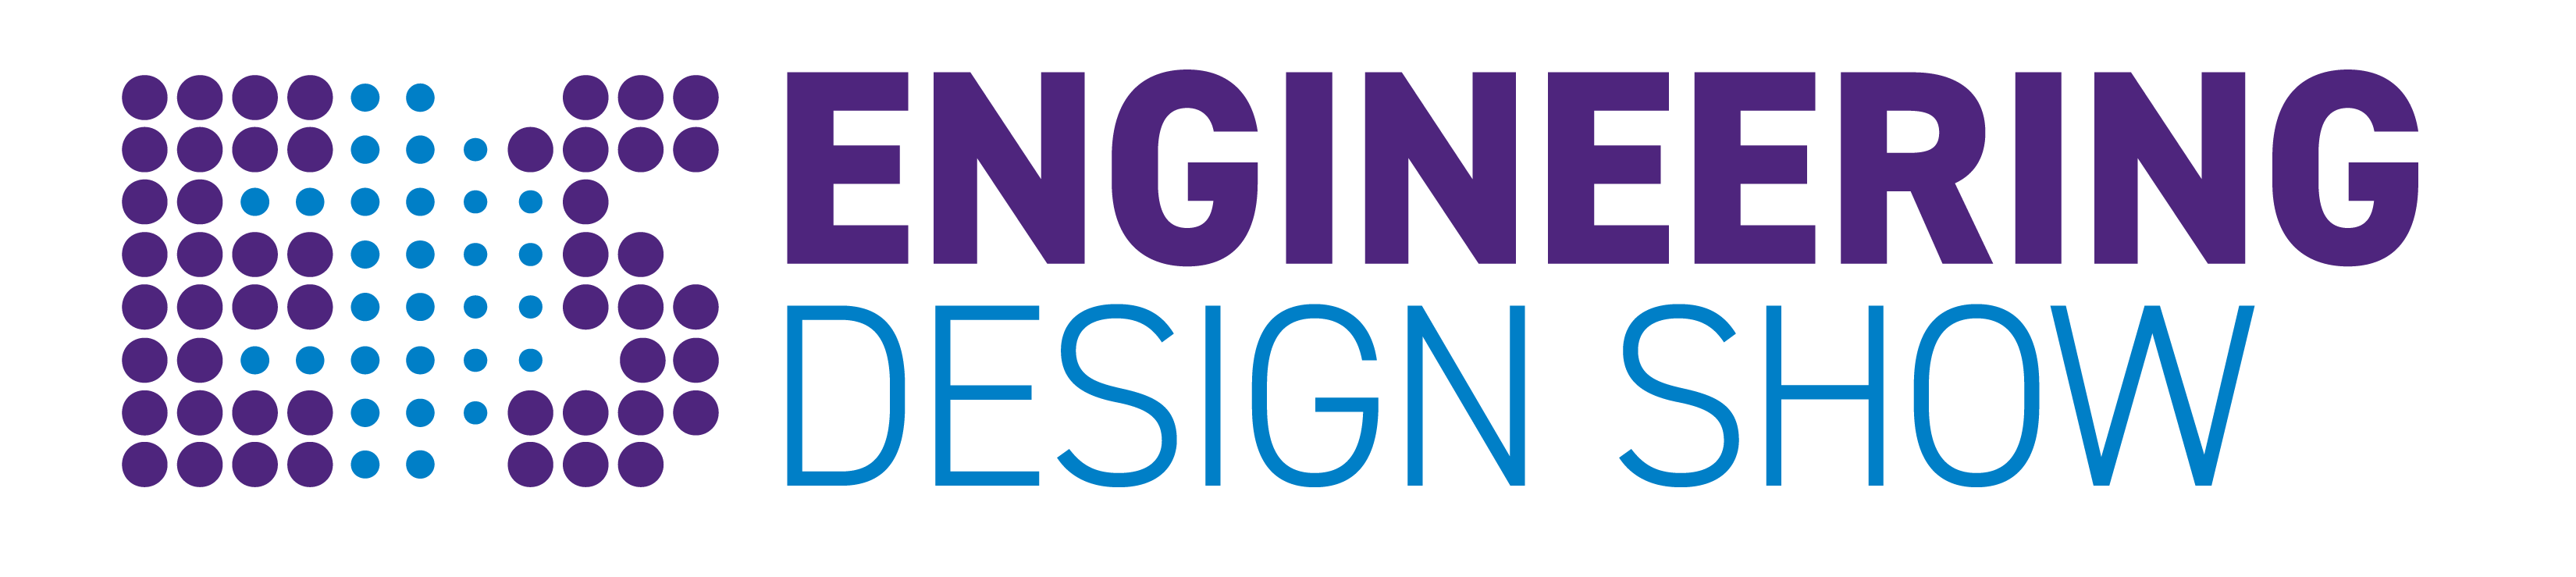 The engineering design show logo